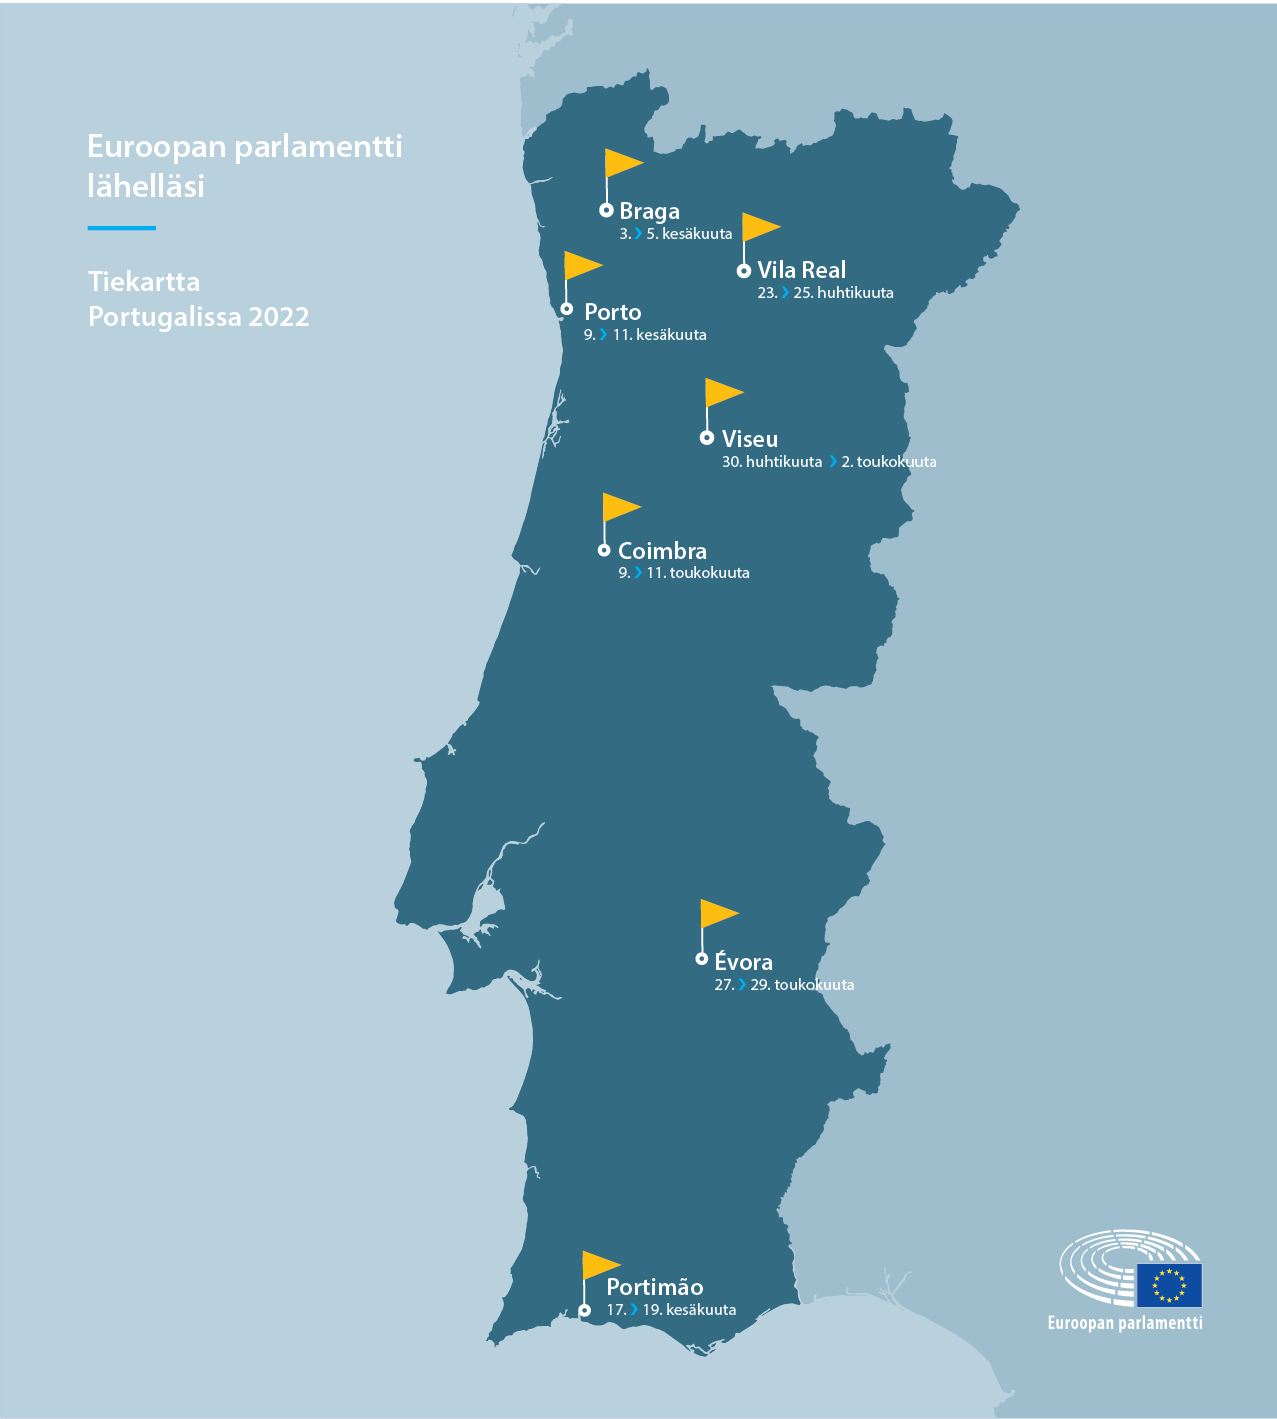 Tiekartta Portugalissa 2022